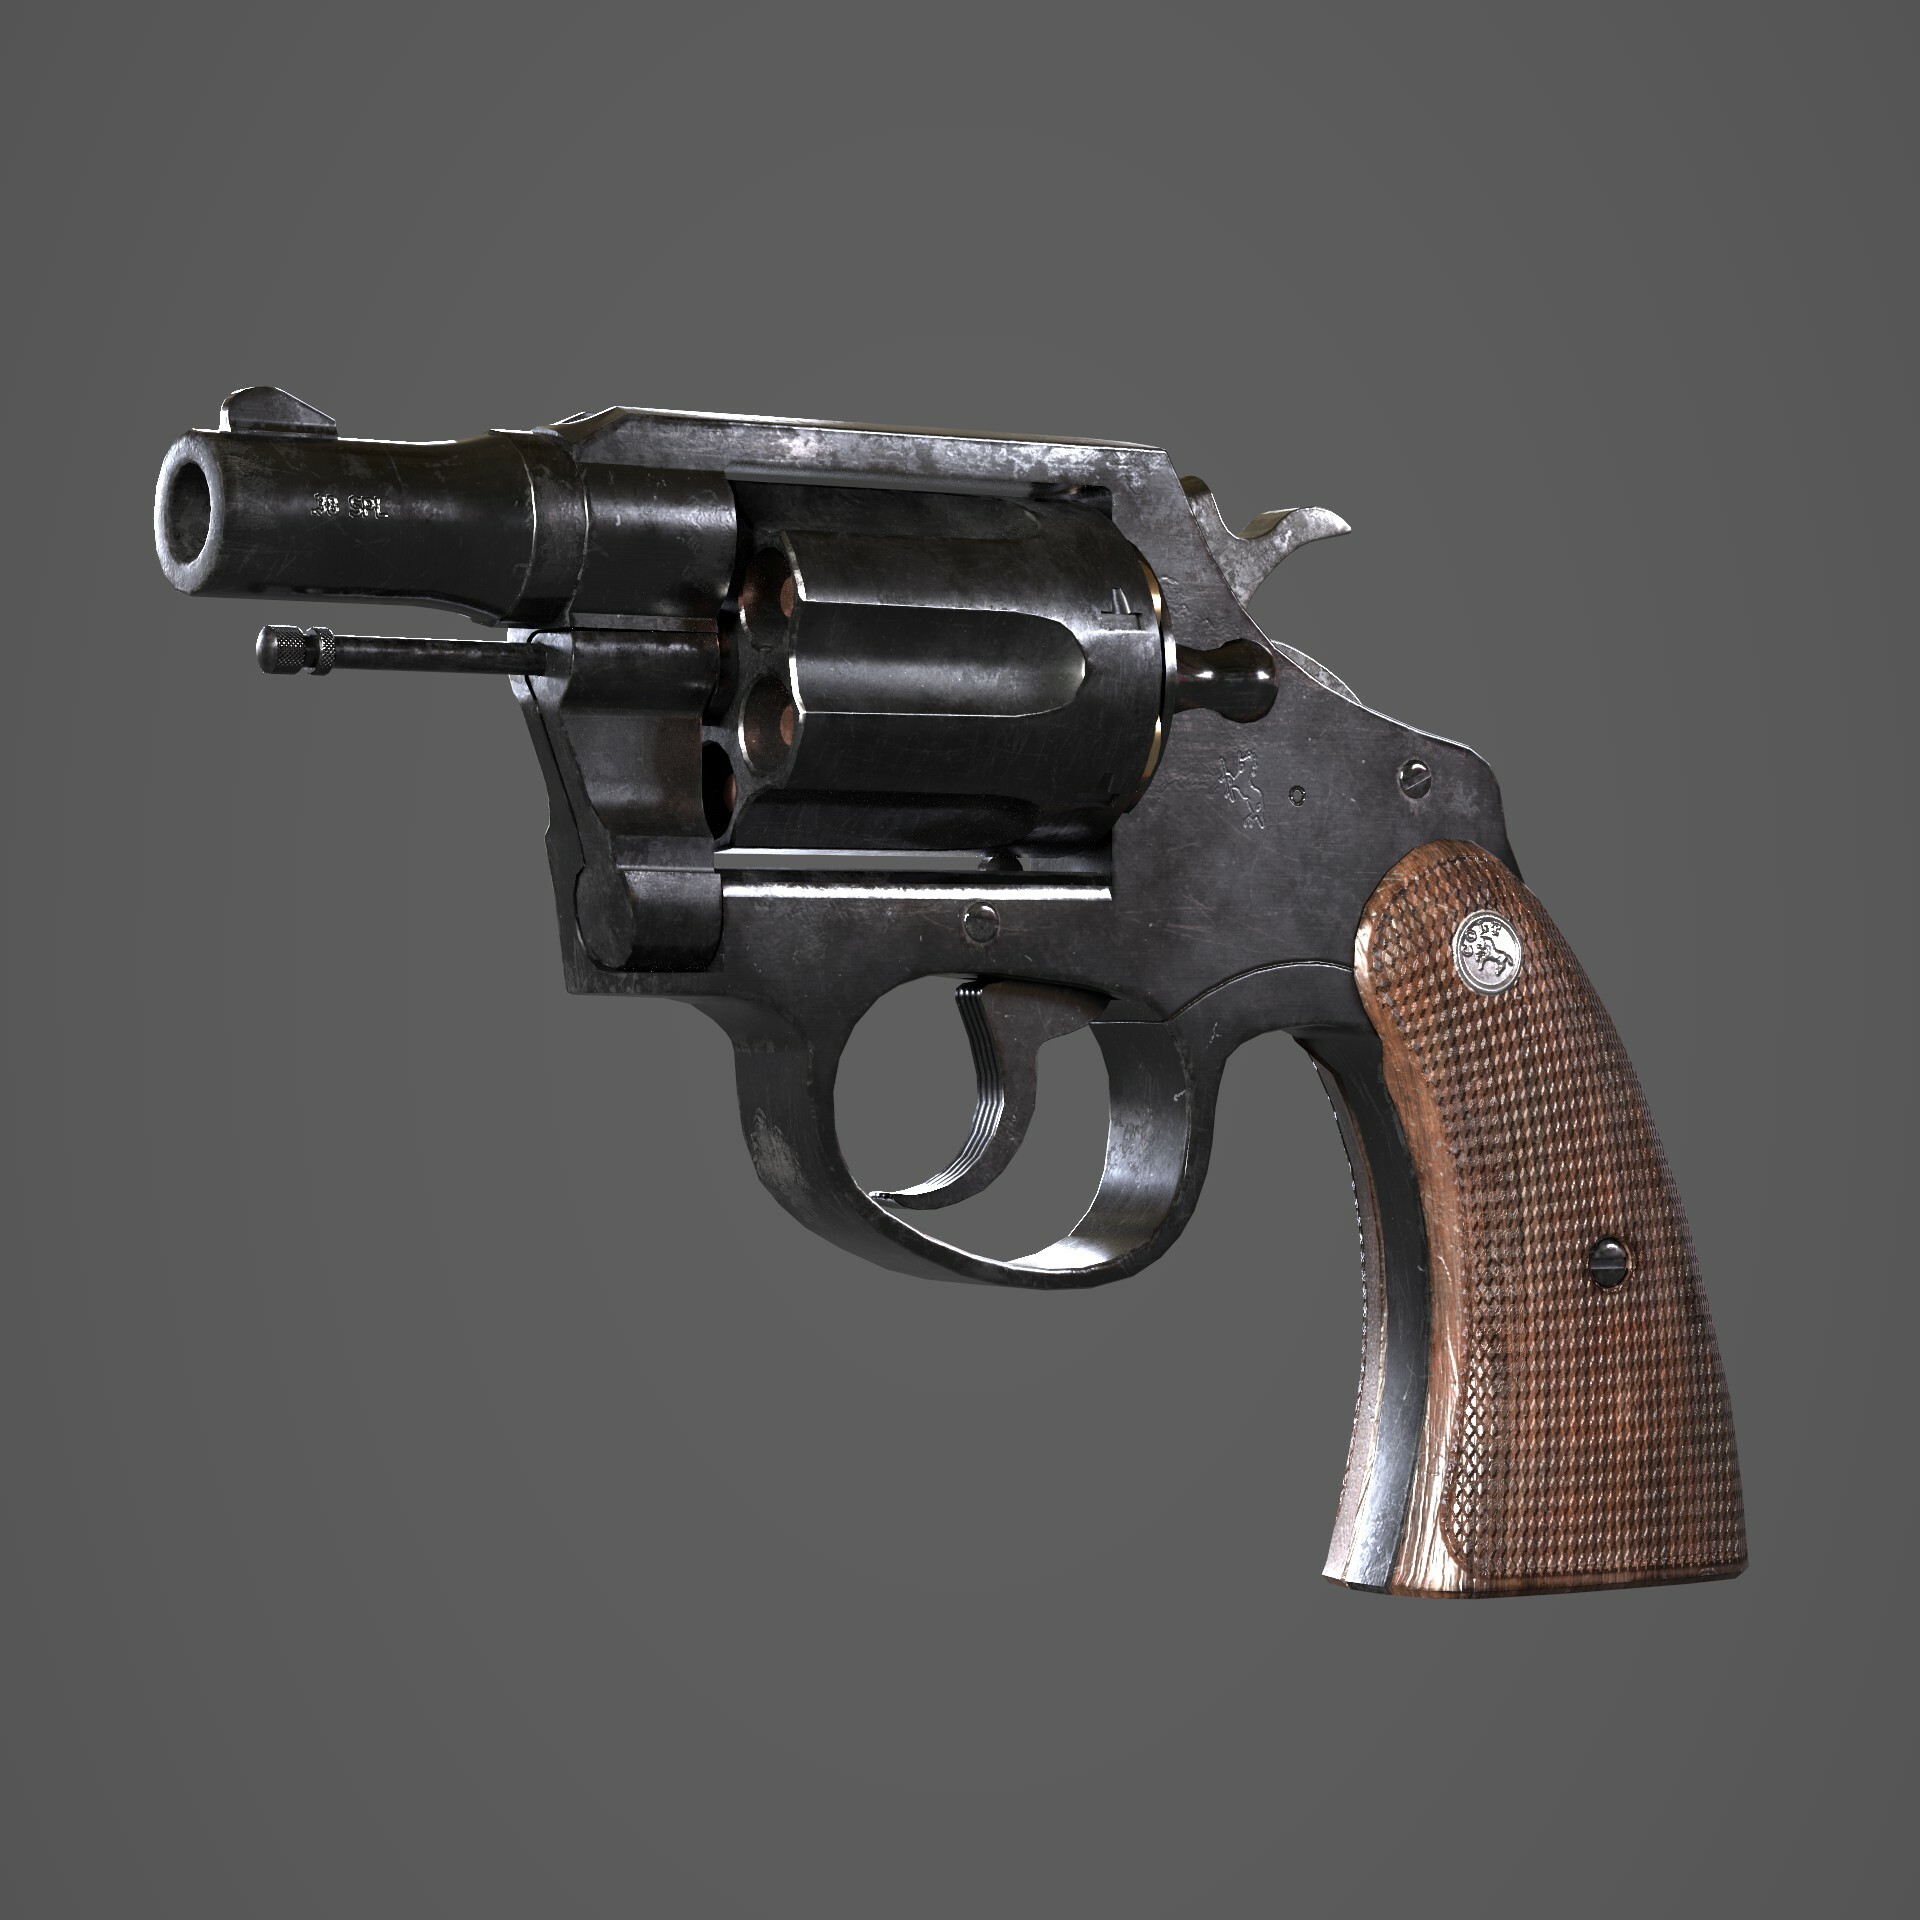 ArtStation - Colt Police .38 Revolver